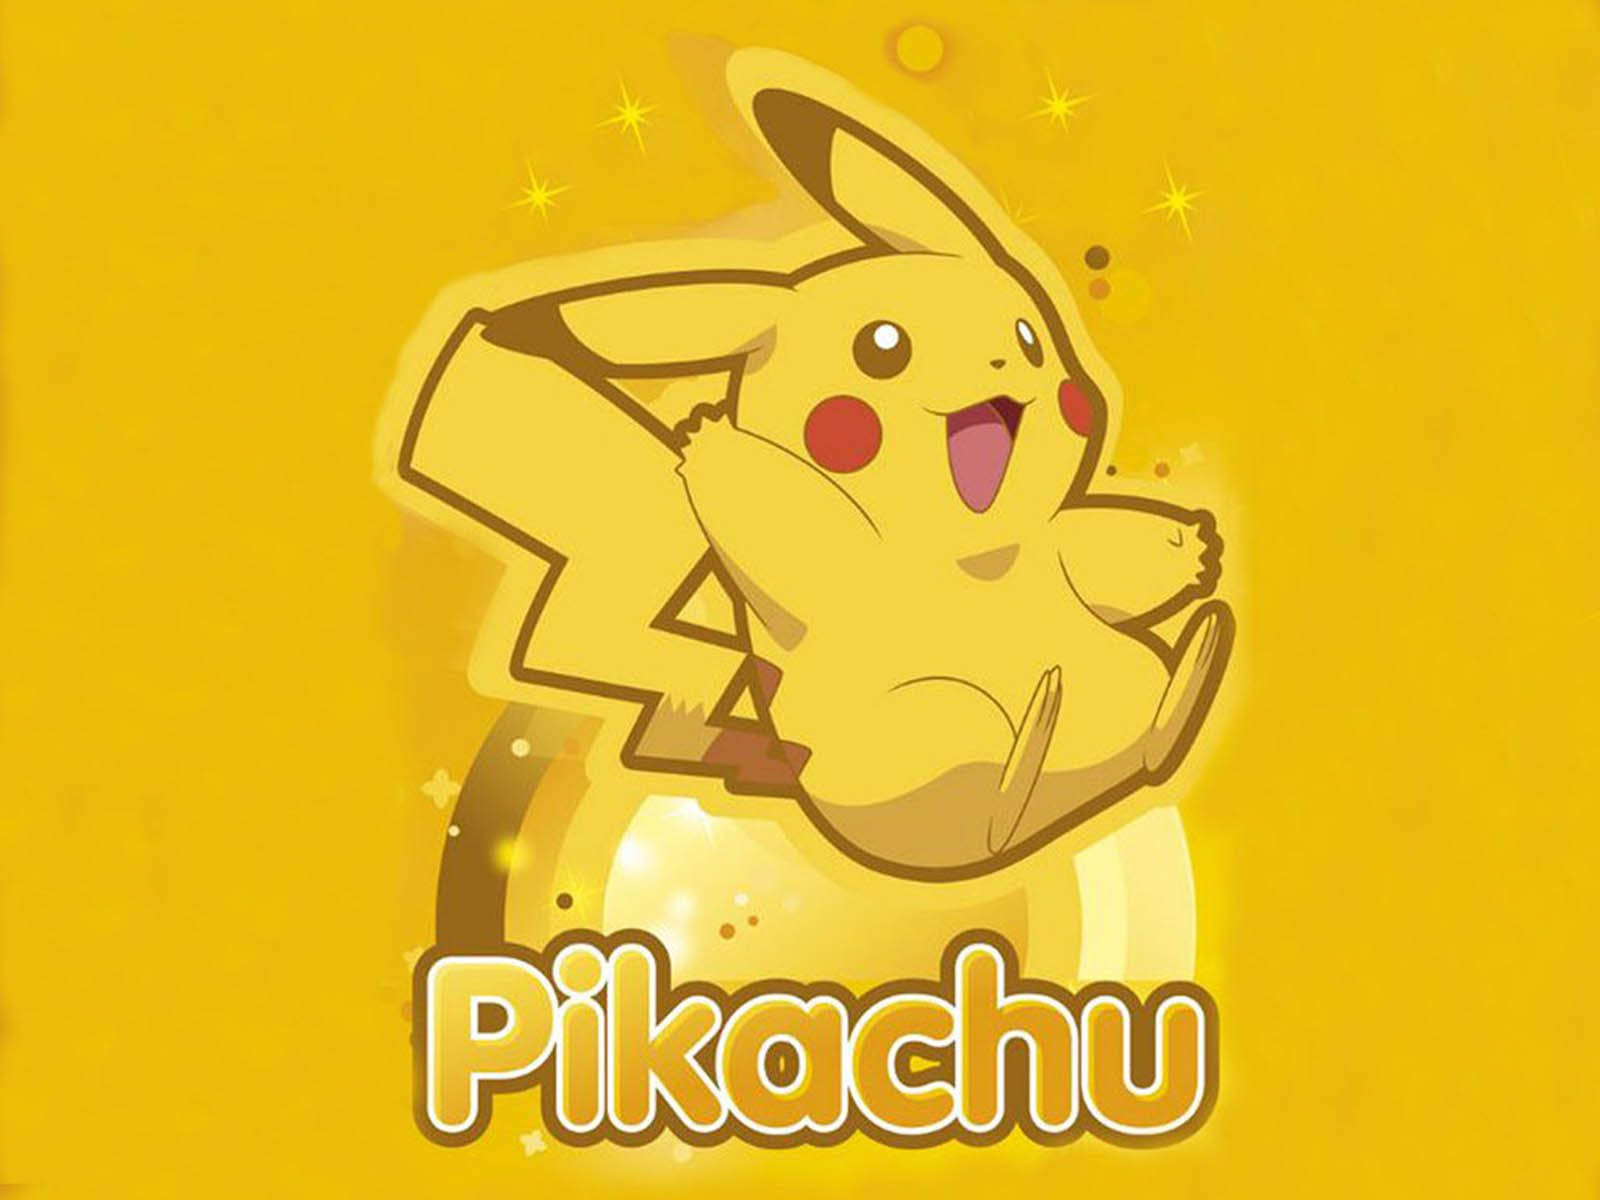 Pikachu 3d Kanto Region Pokémon